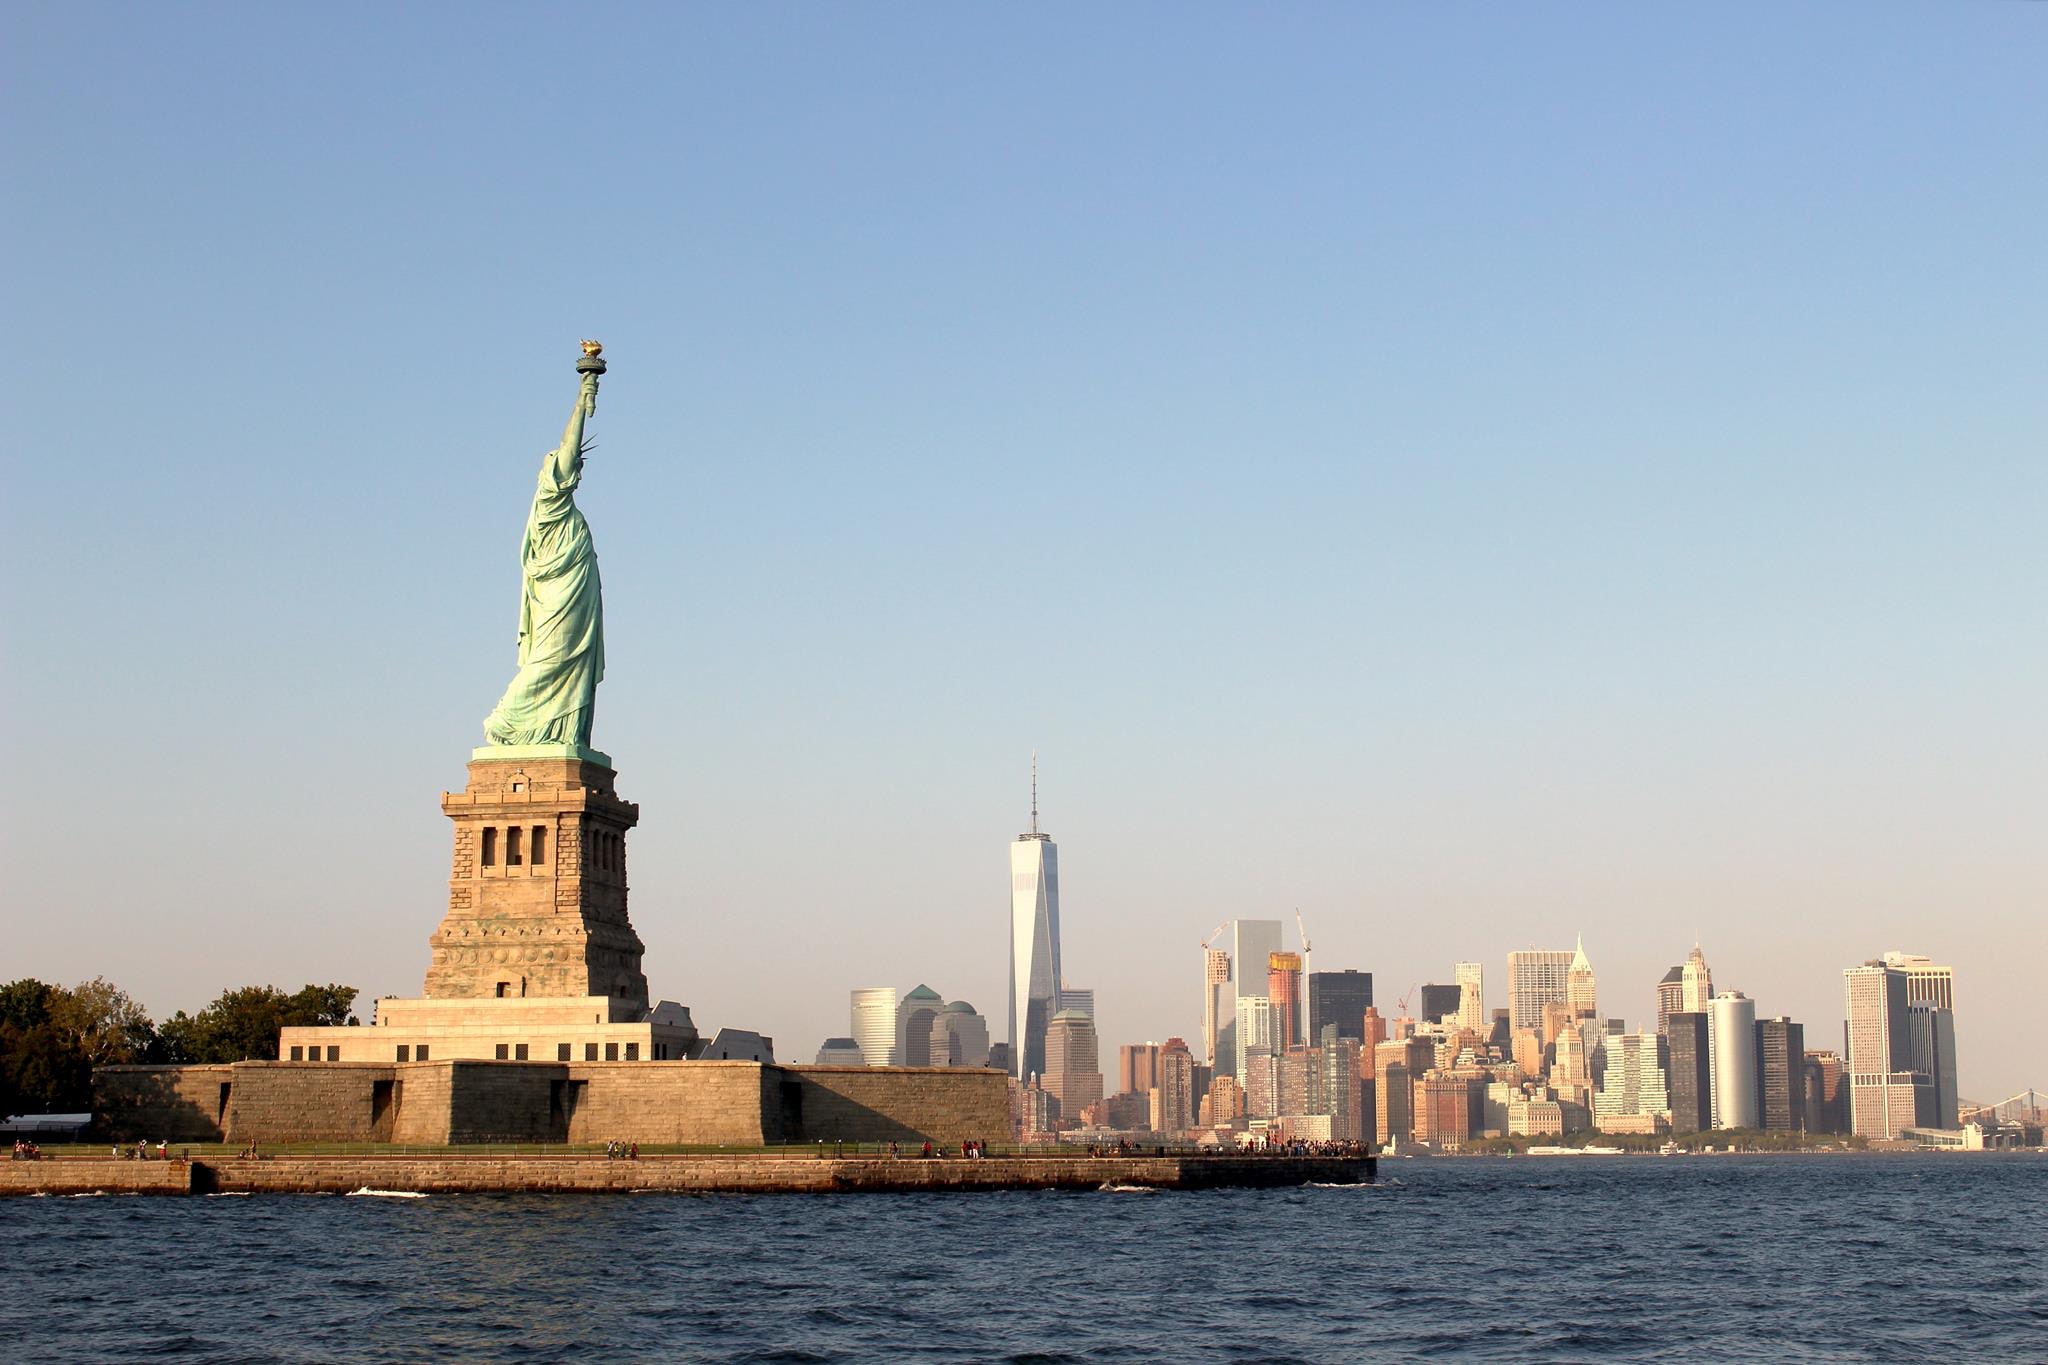 The Statue of Liberty - New York, New York